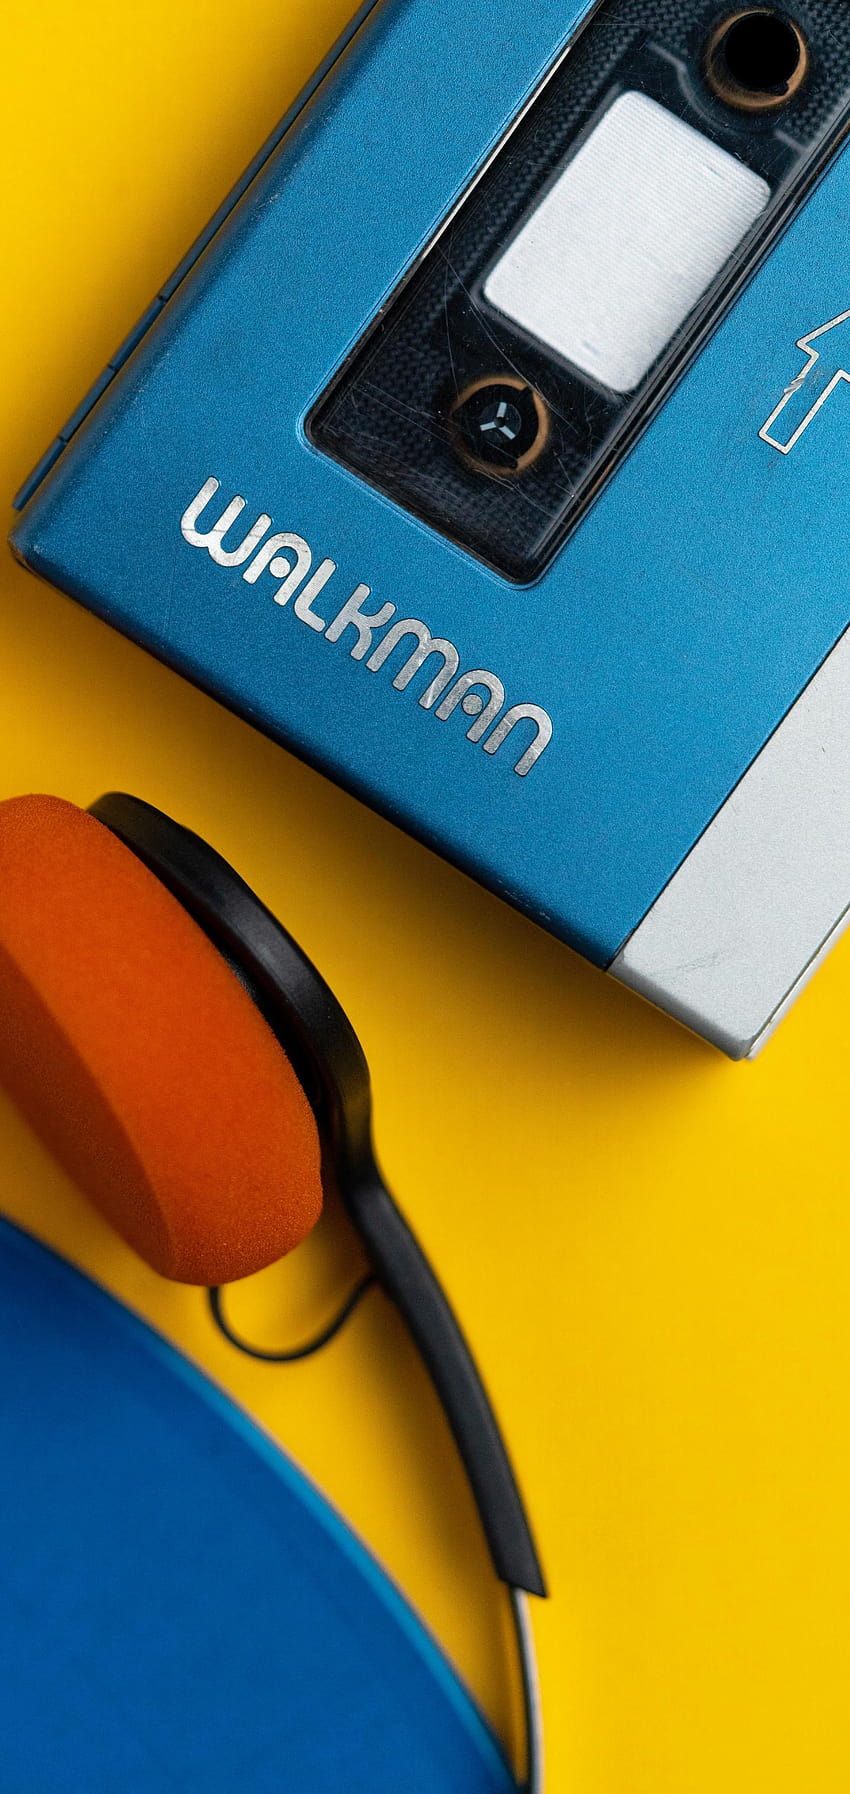 Sony Walkman de Jonathan Morrison, walkman android Papel de parede de celular HD